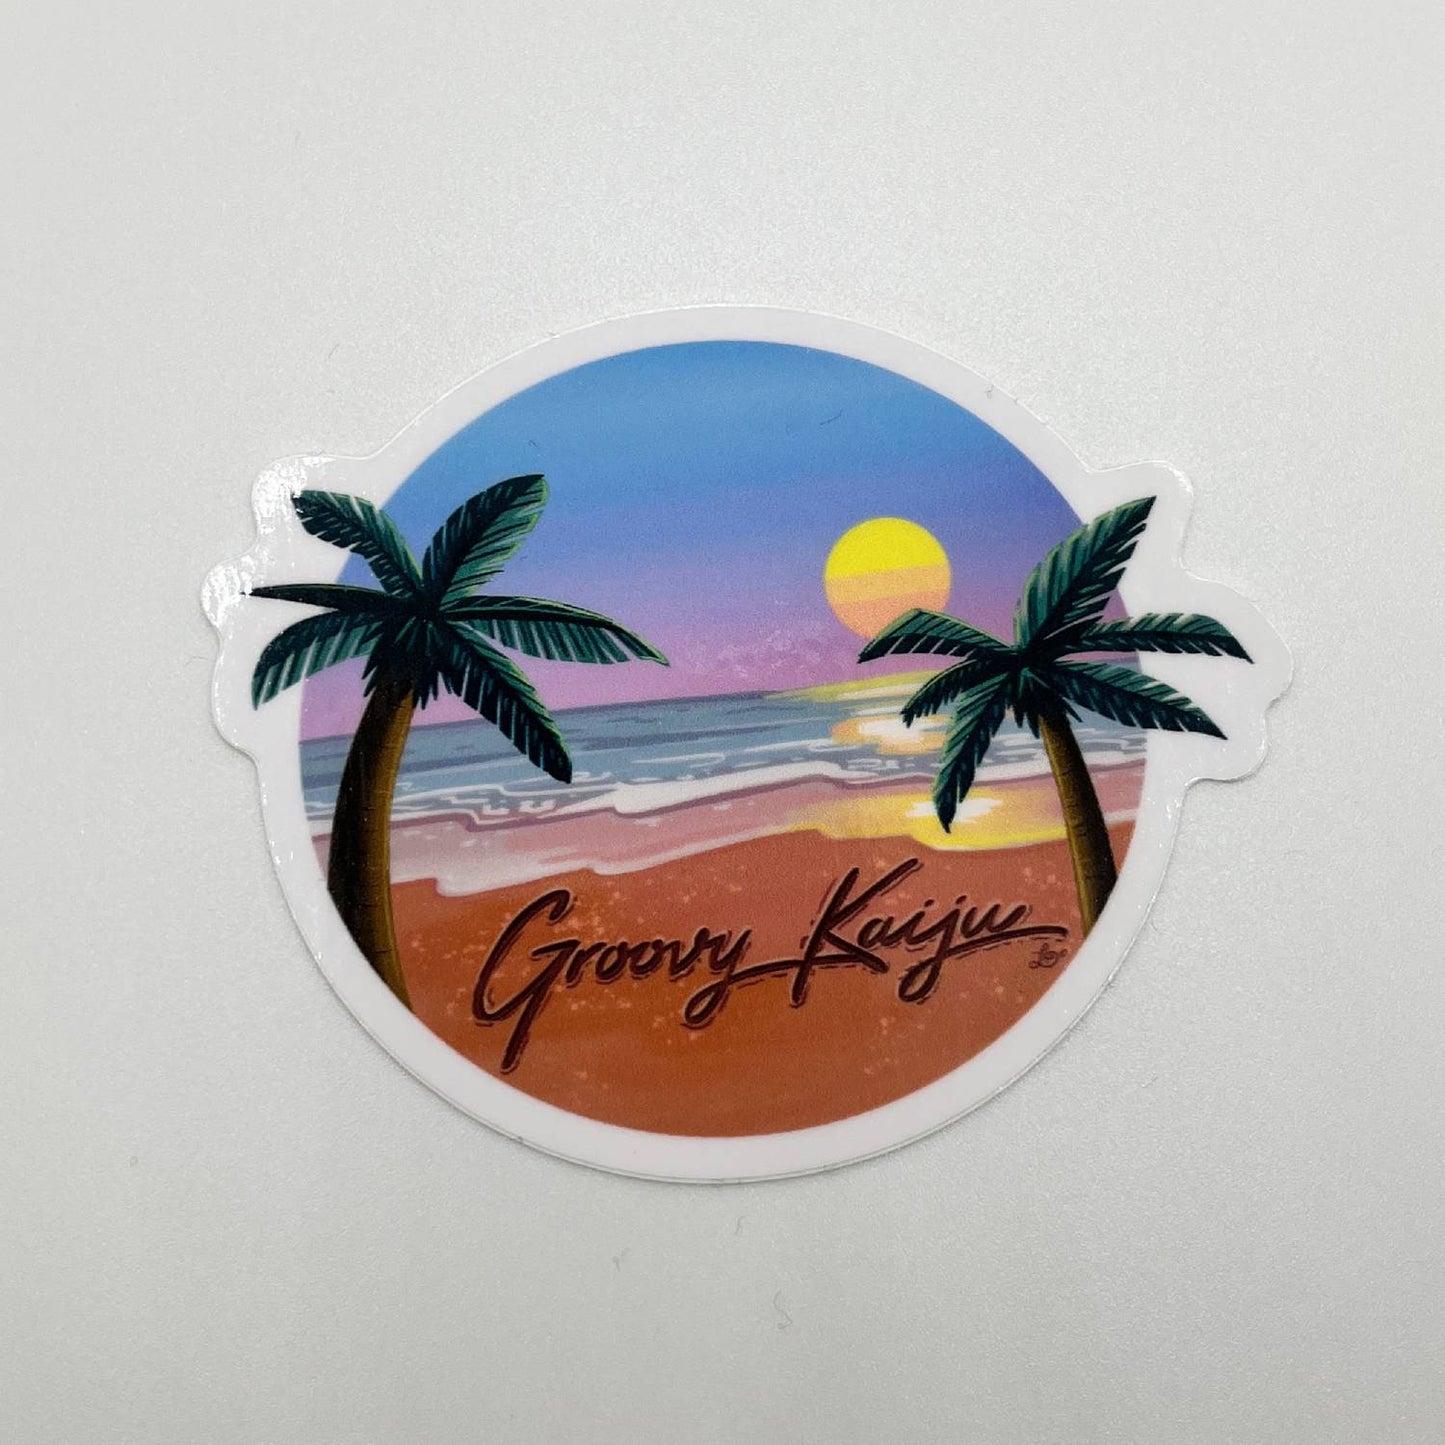 Groovy Kaiju - Variety Sticker Pack